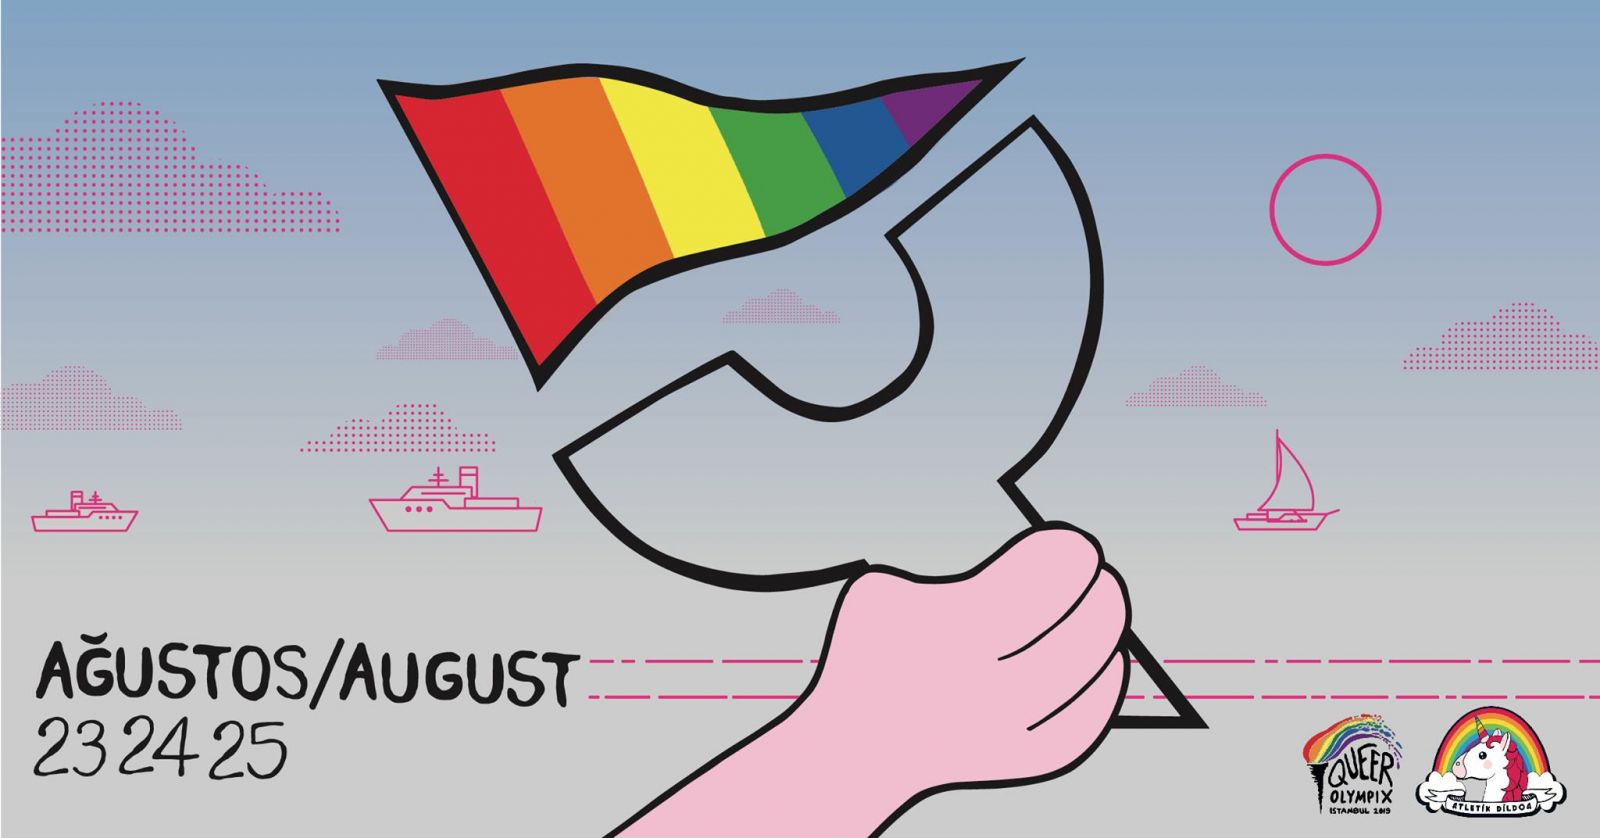 Queer Olympix Kadıköy Kaymakamlığı tarafından yasaklandı